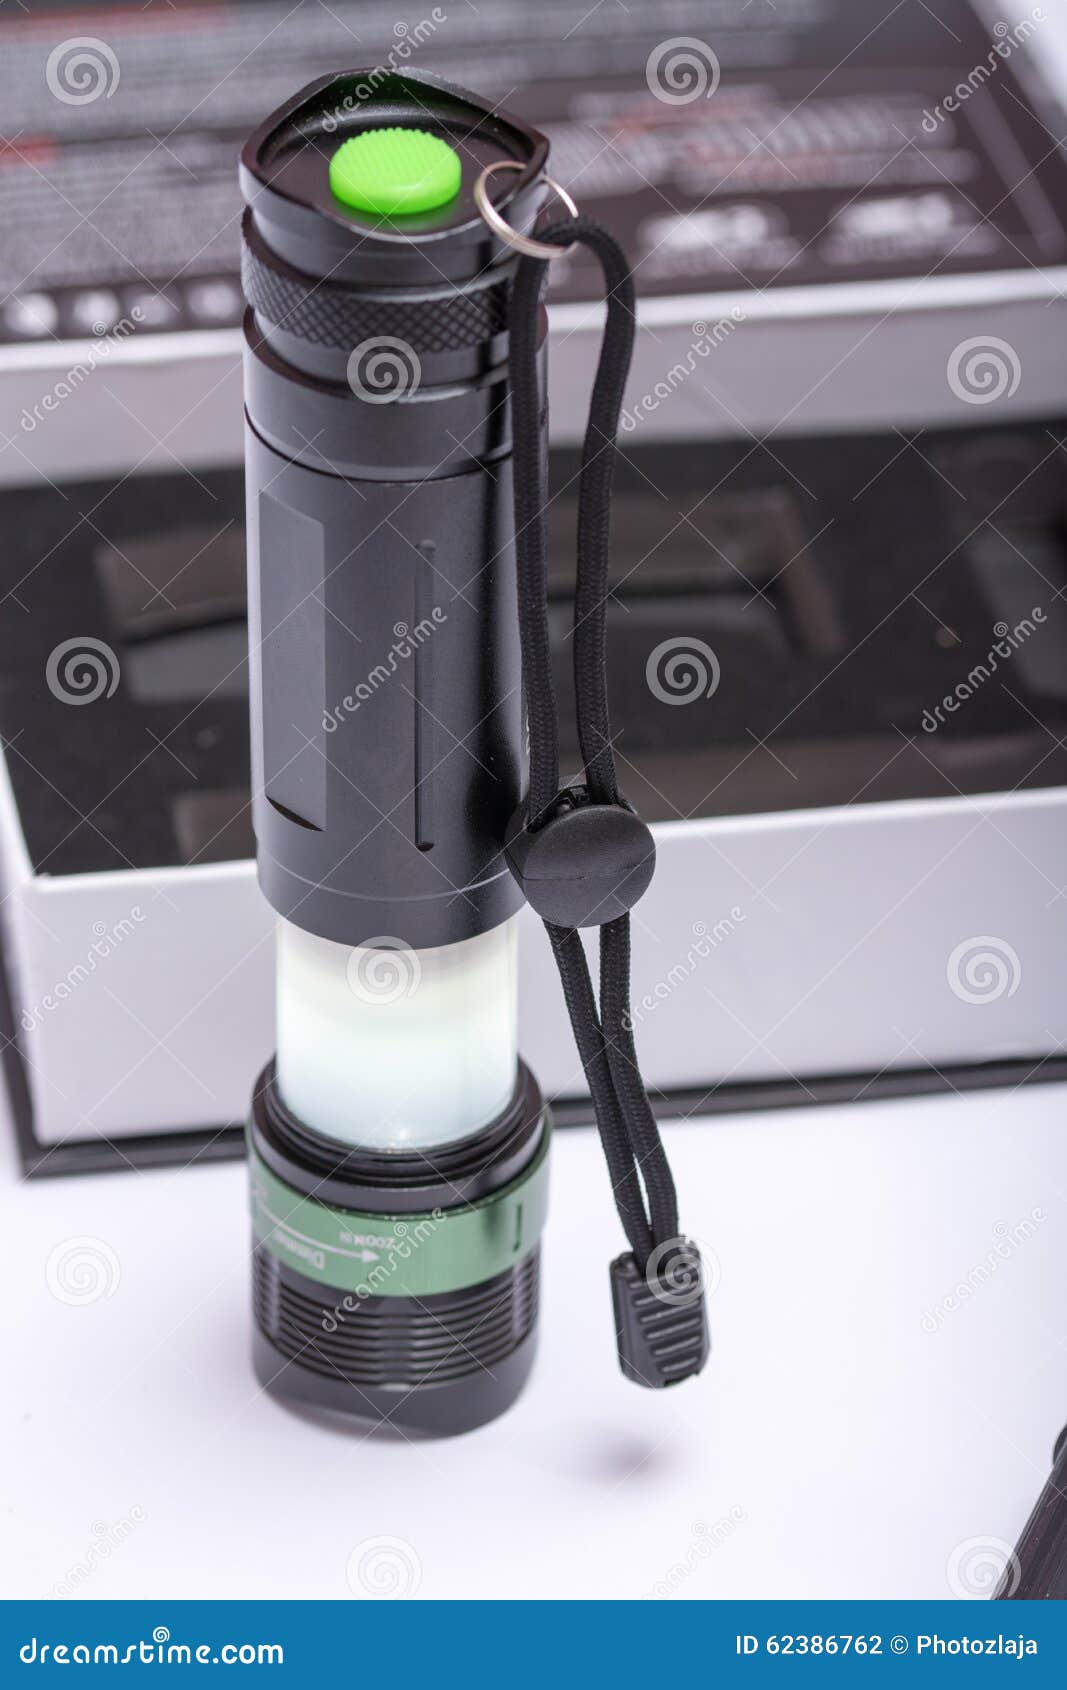 led cree flashlight torch green button